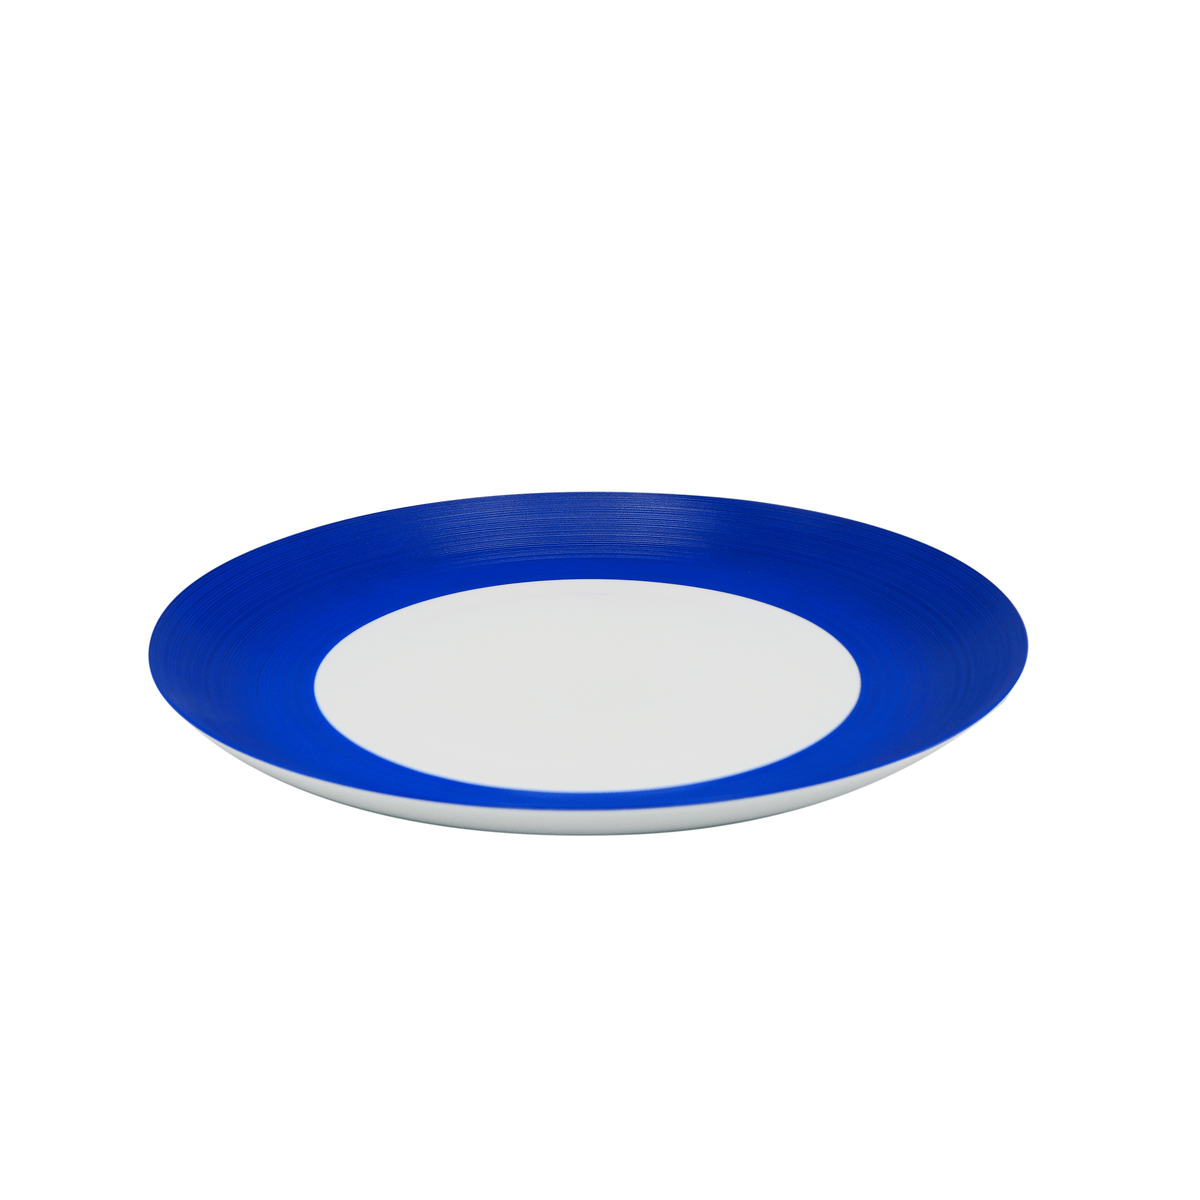 HEMISPHERE Royal Blue - Flat round dish, maxi